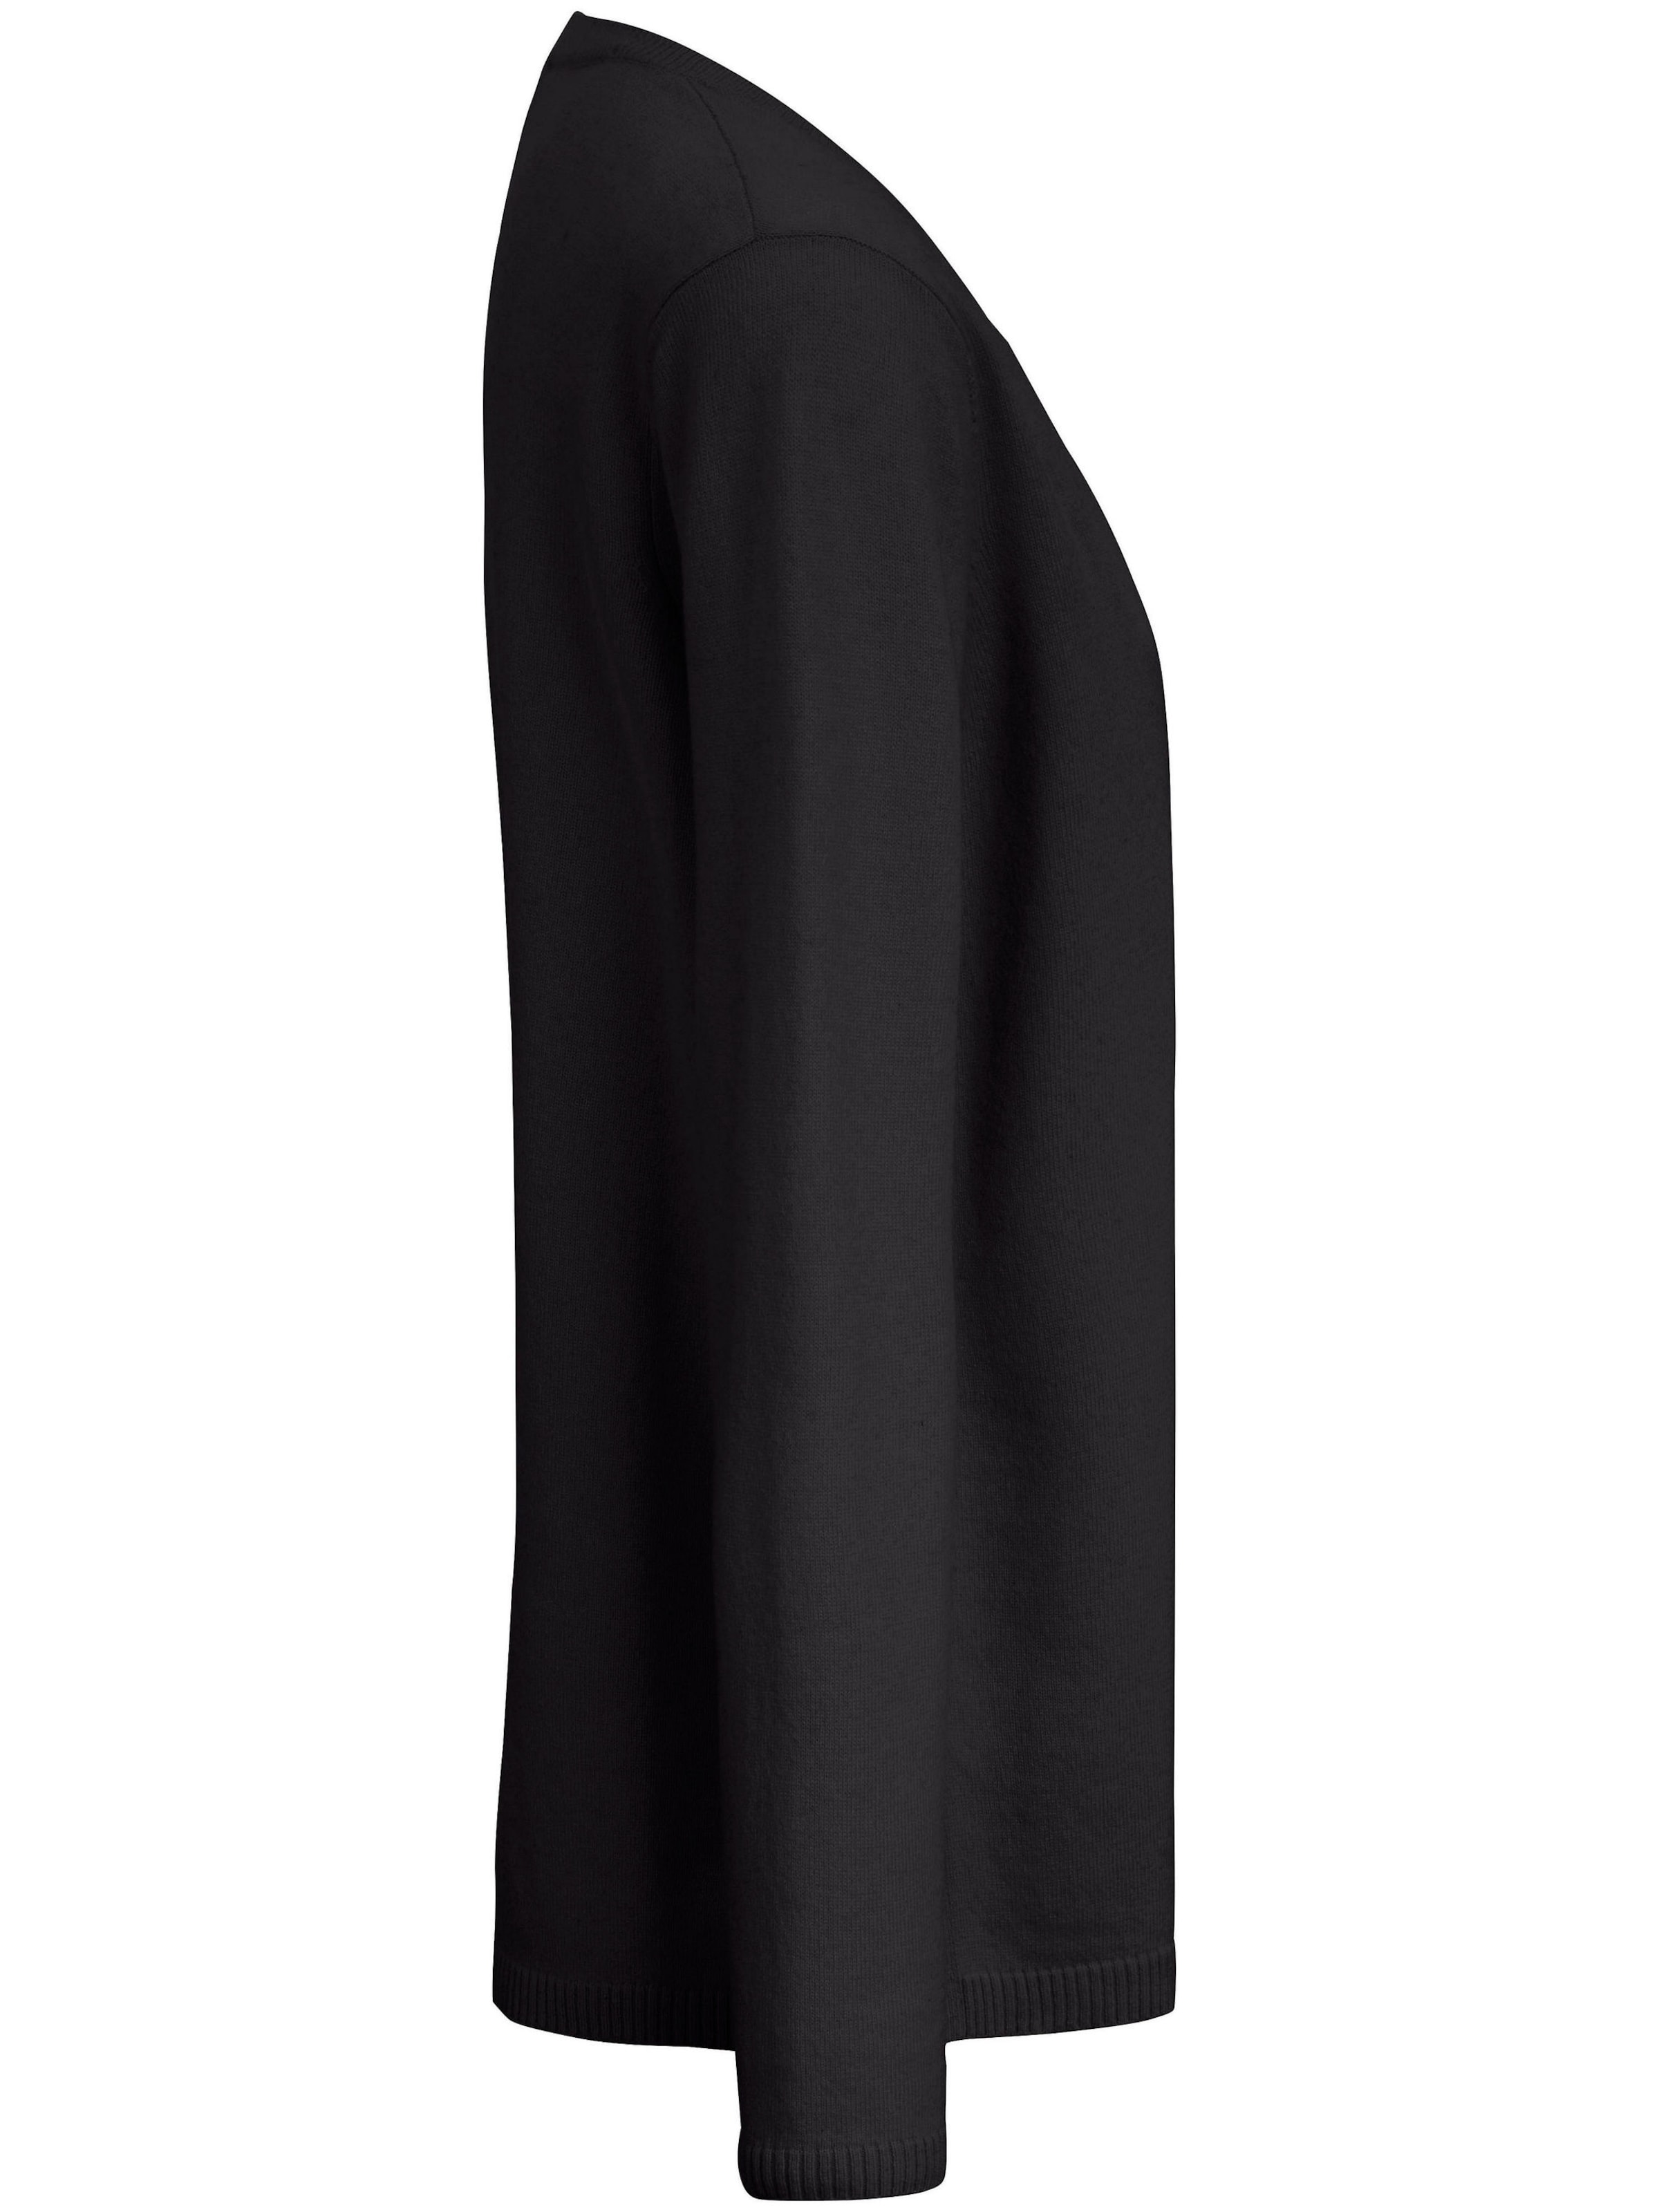 Frauen Pullover & Strick include V-Pullover aus 100% Kaschmir in Schwarz - GJ89924